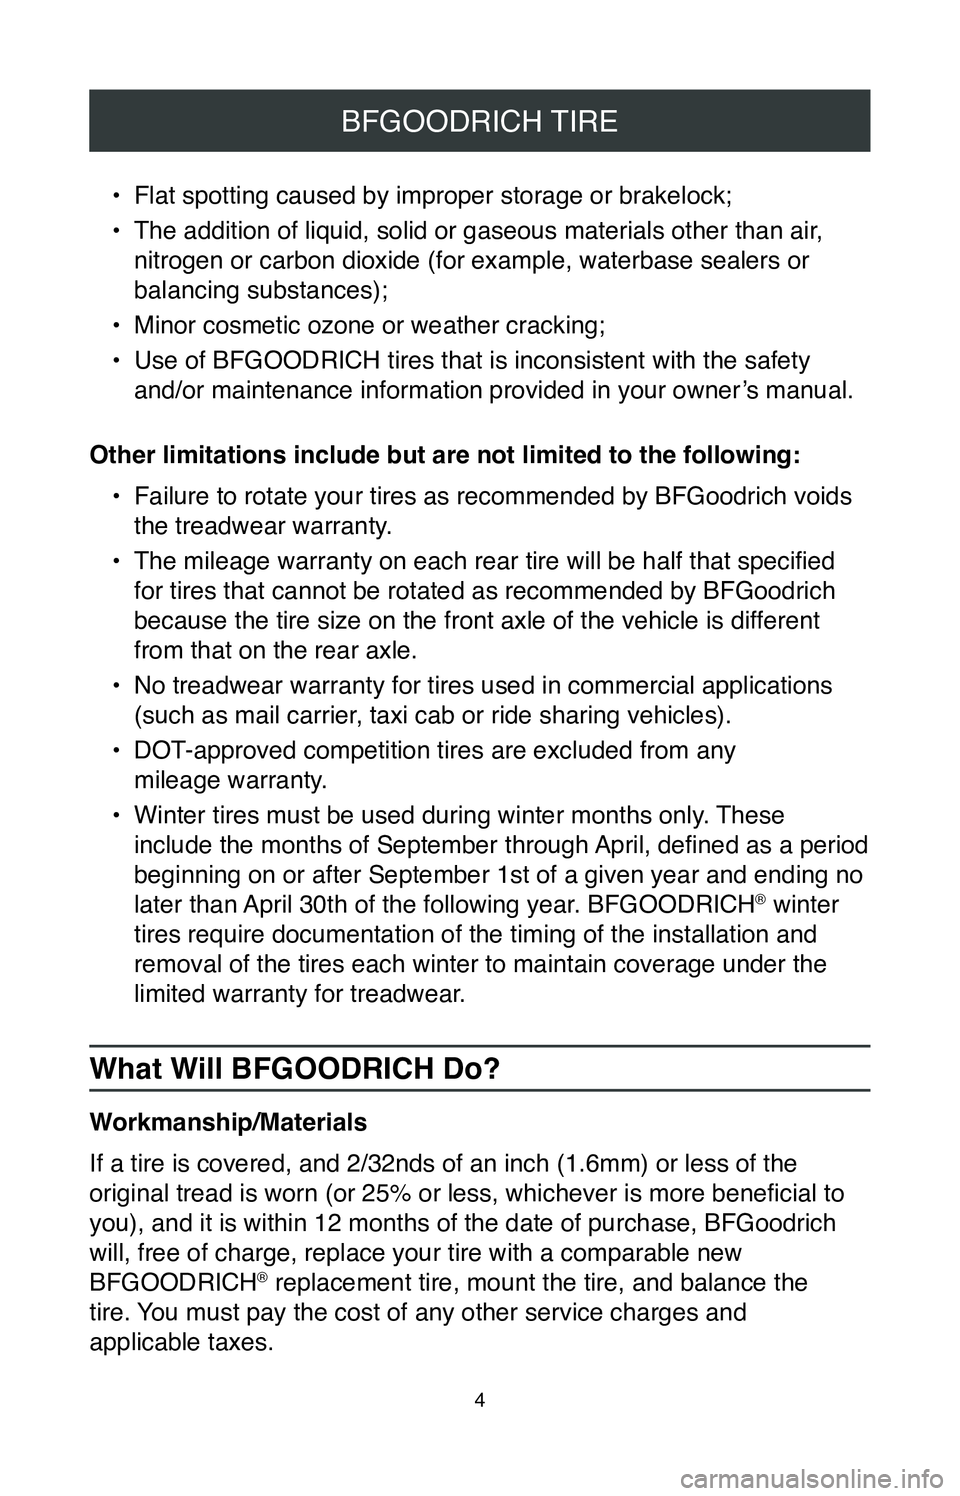 TOYOTA CAMRY HYBRID 2020  Warranties & Maintenance Guides (in English) 4
BFGOODRICH TIRE
